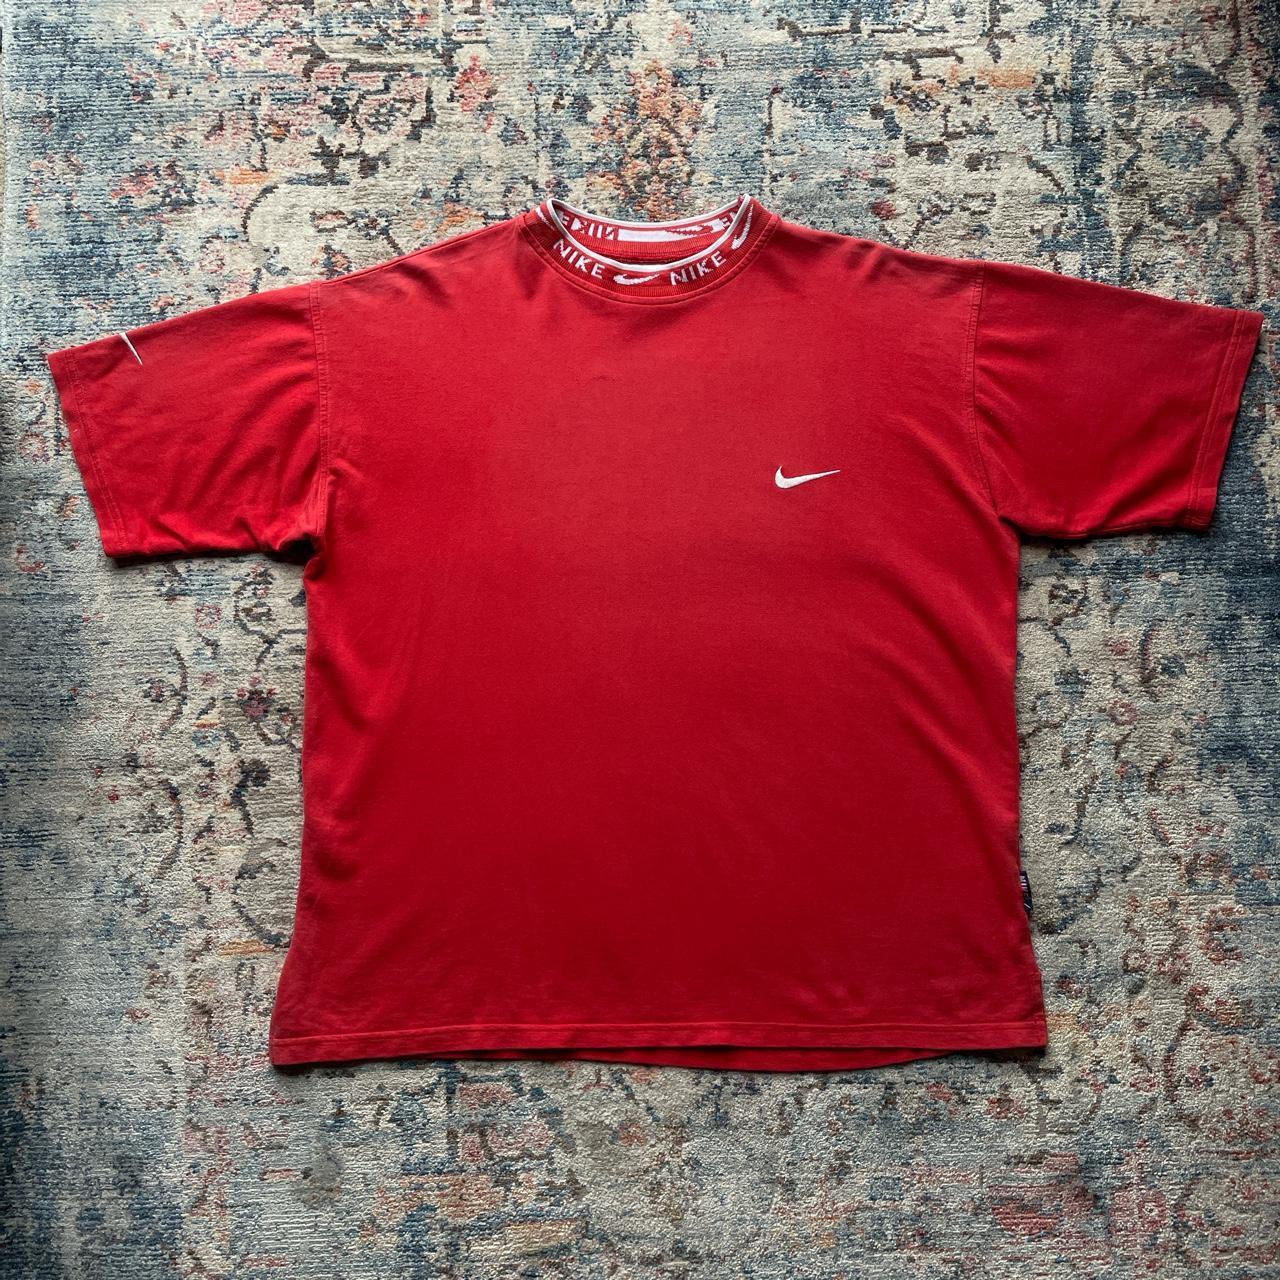 Vintage Nike Red T-Shirt